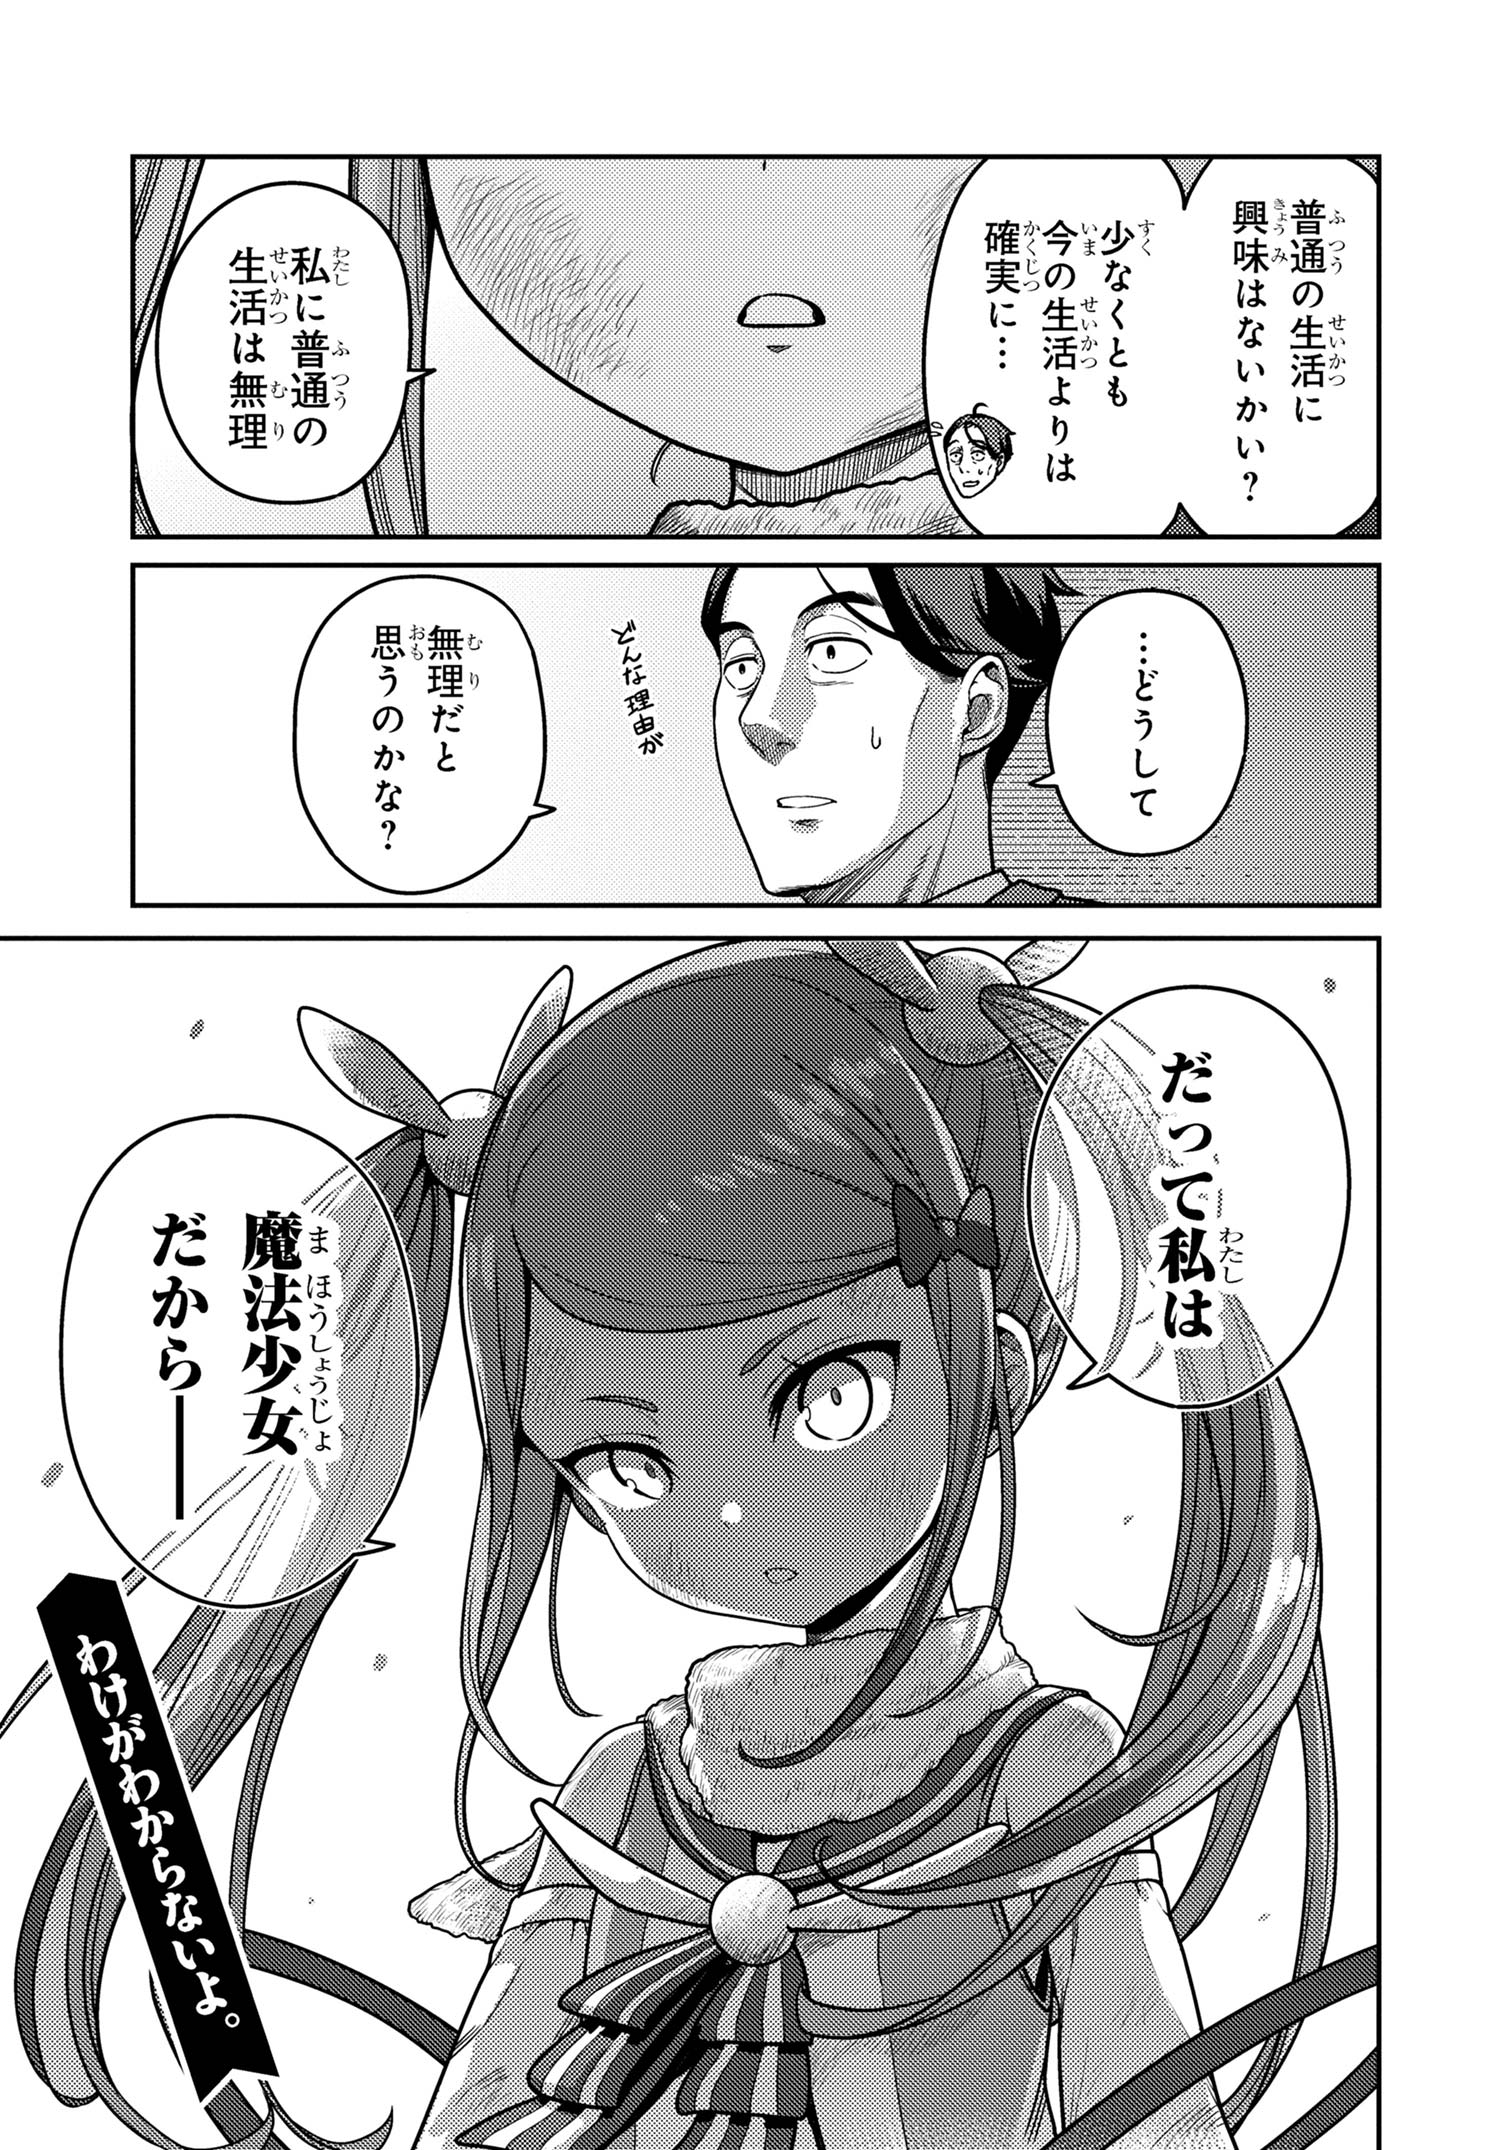 Sasaki to Pii-chan - Chapter 17.1 - Page 15